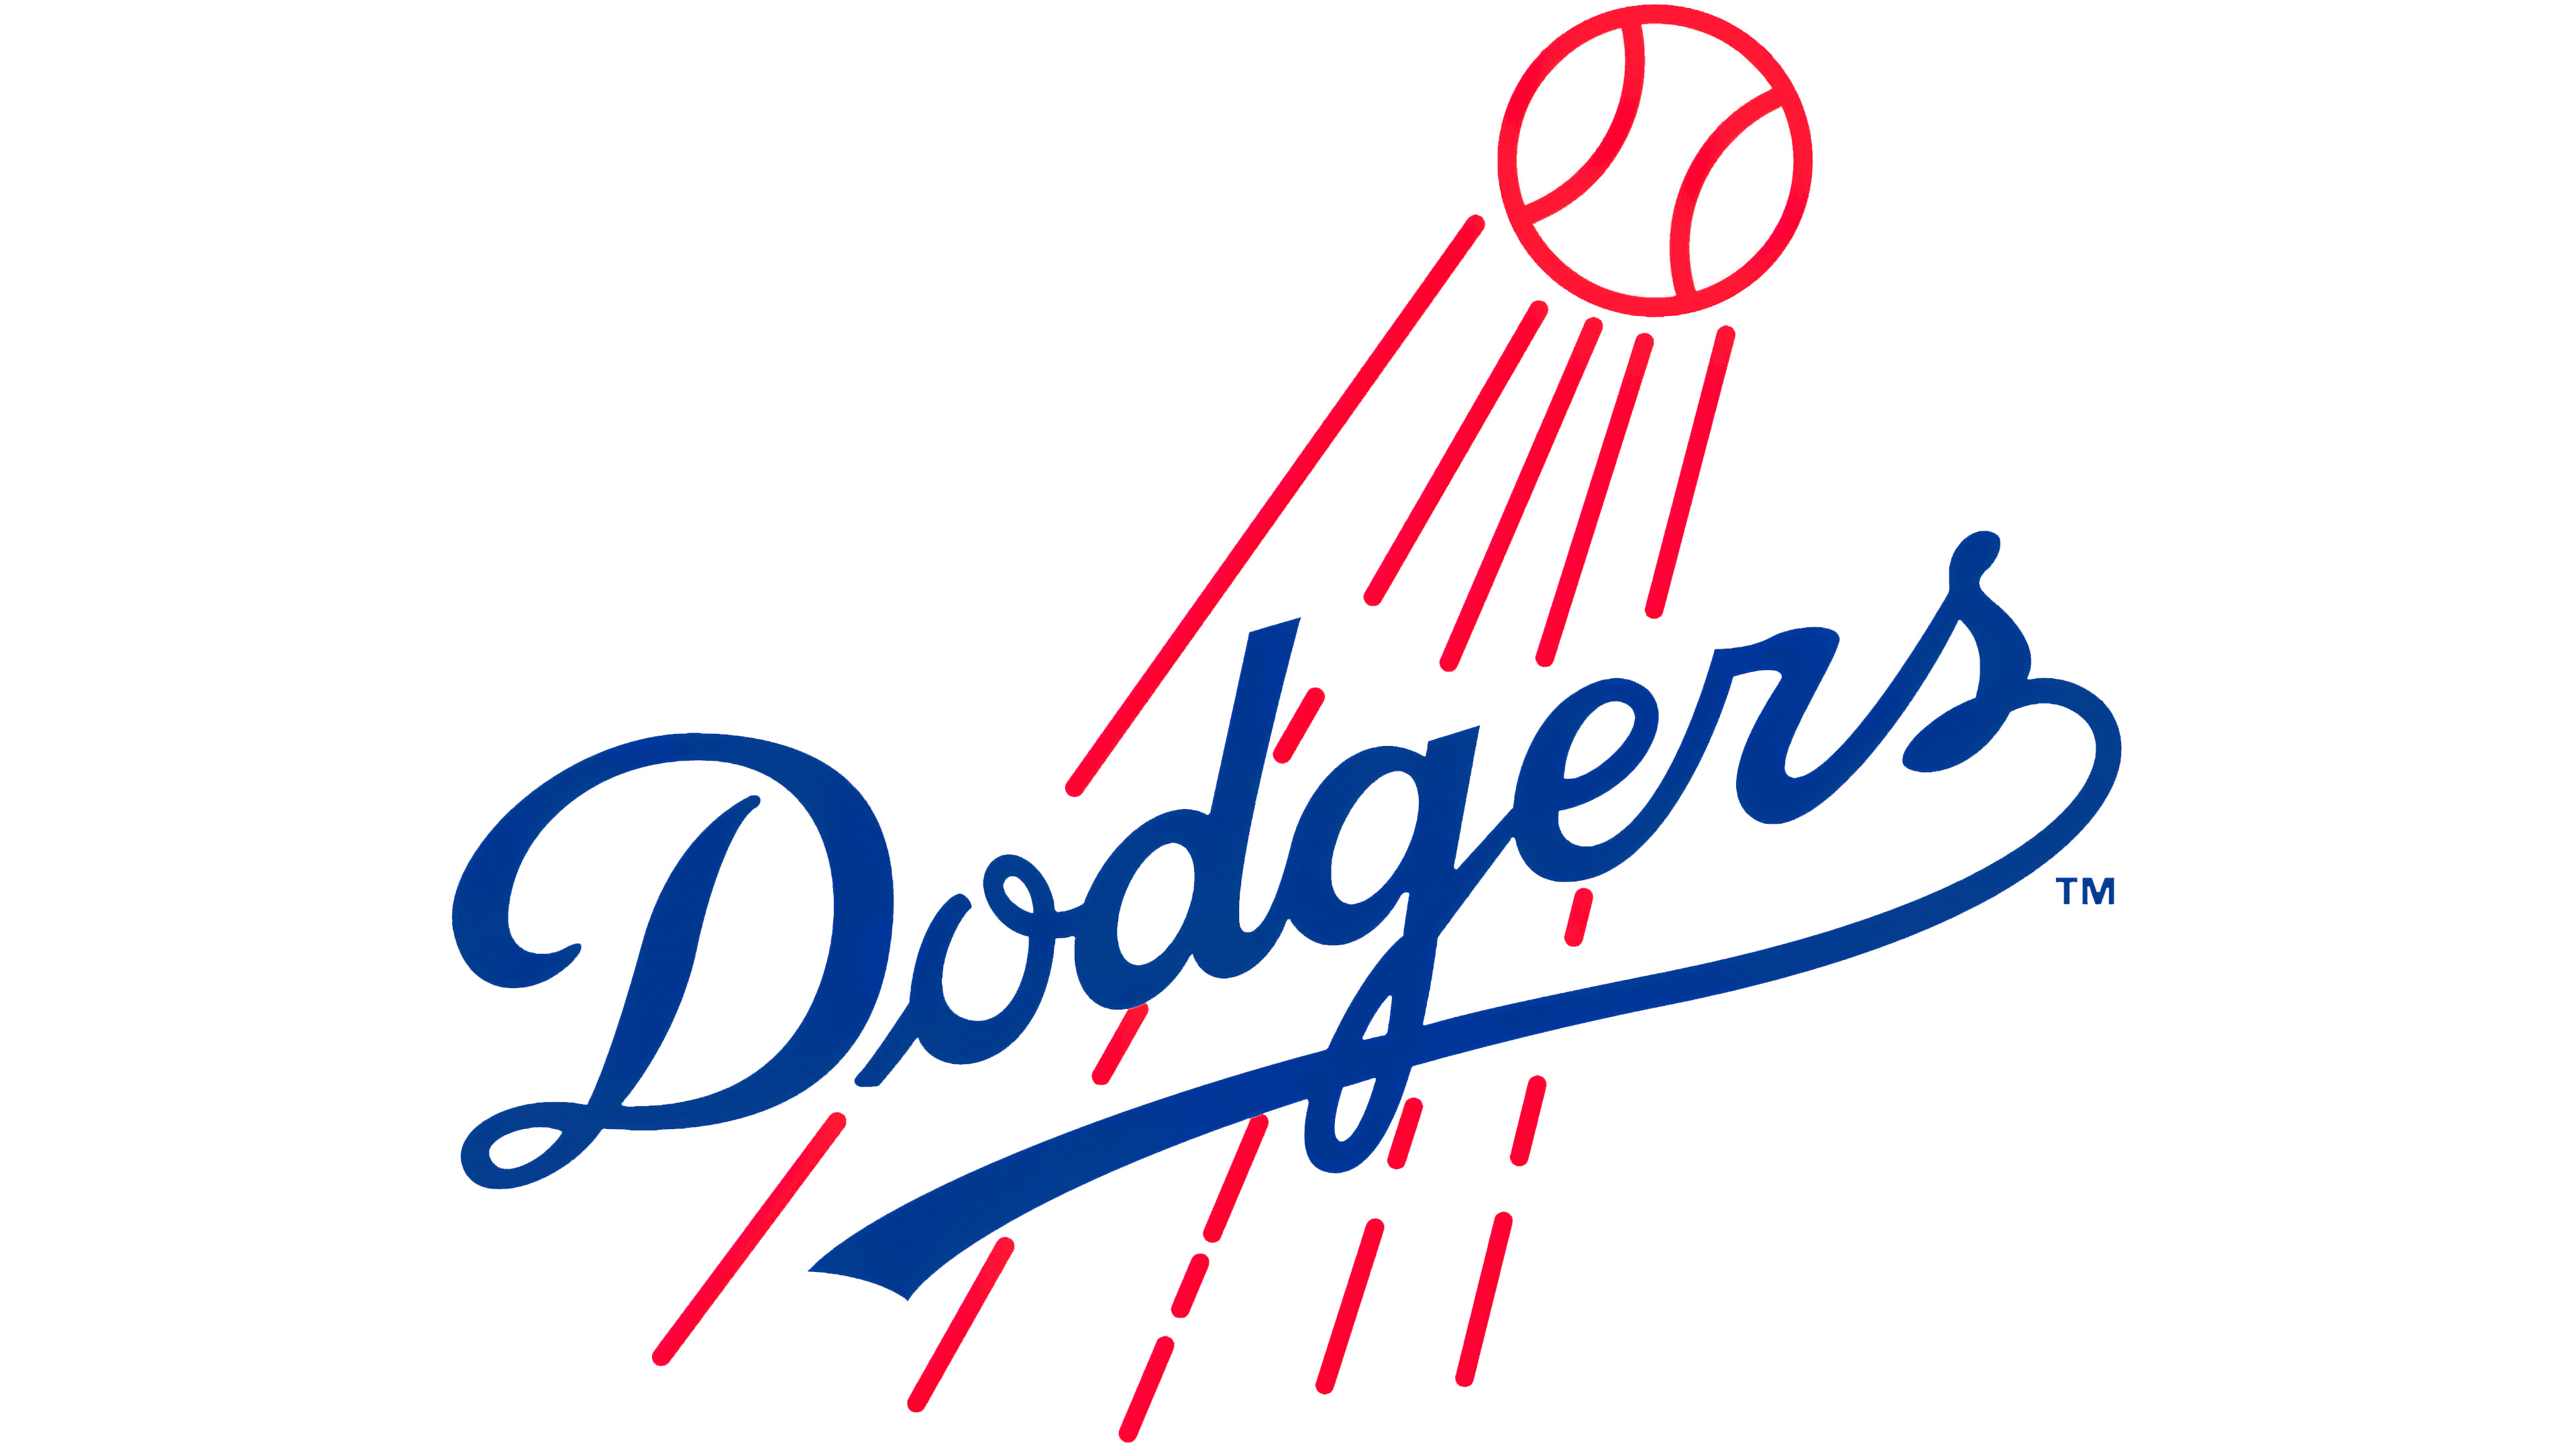 Oklahoma City Dodgers, PNG Images, Christopher Peltier, Sports, 3840x2160 4K Desktop